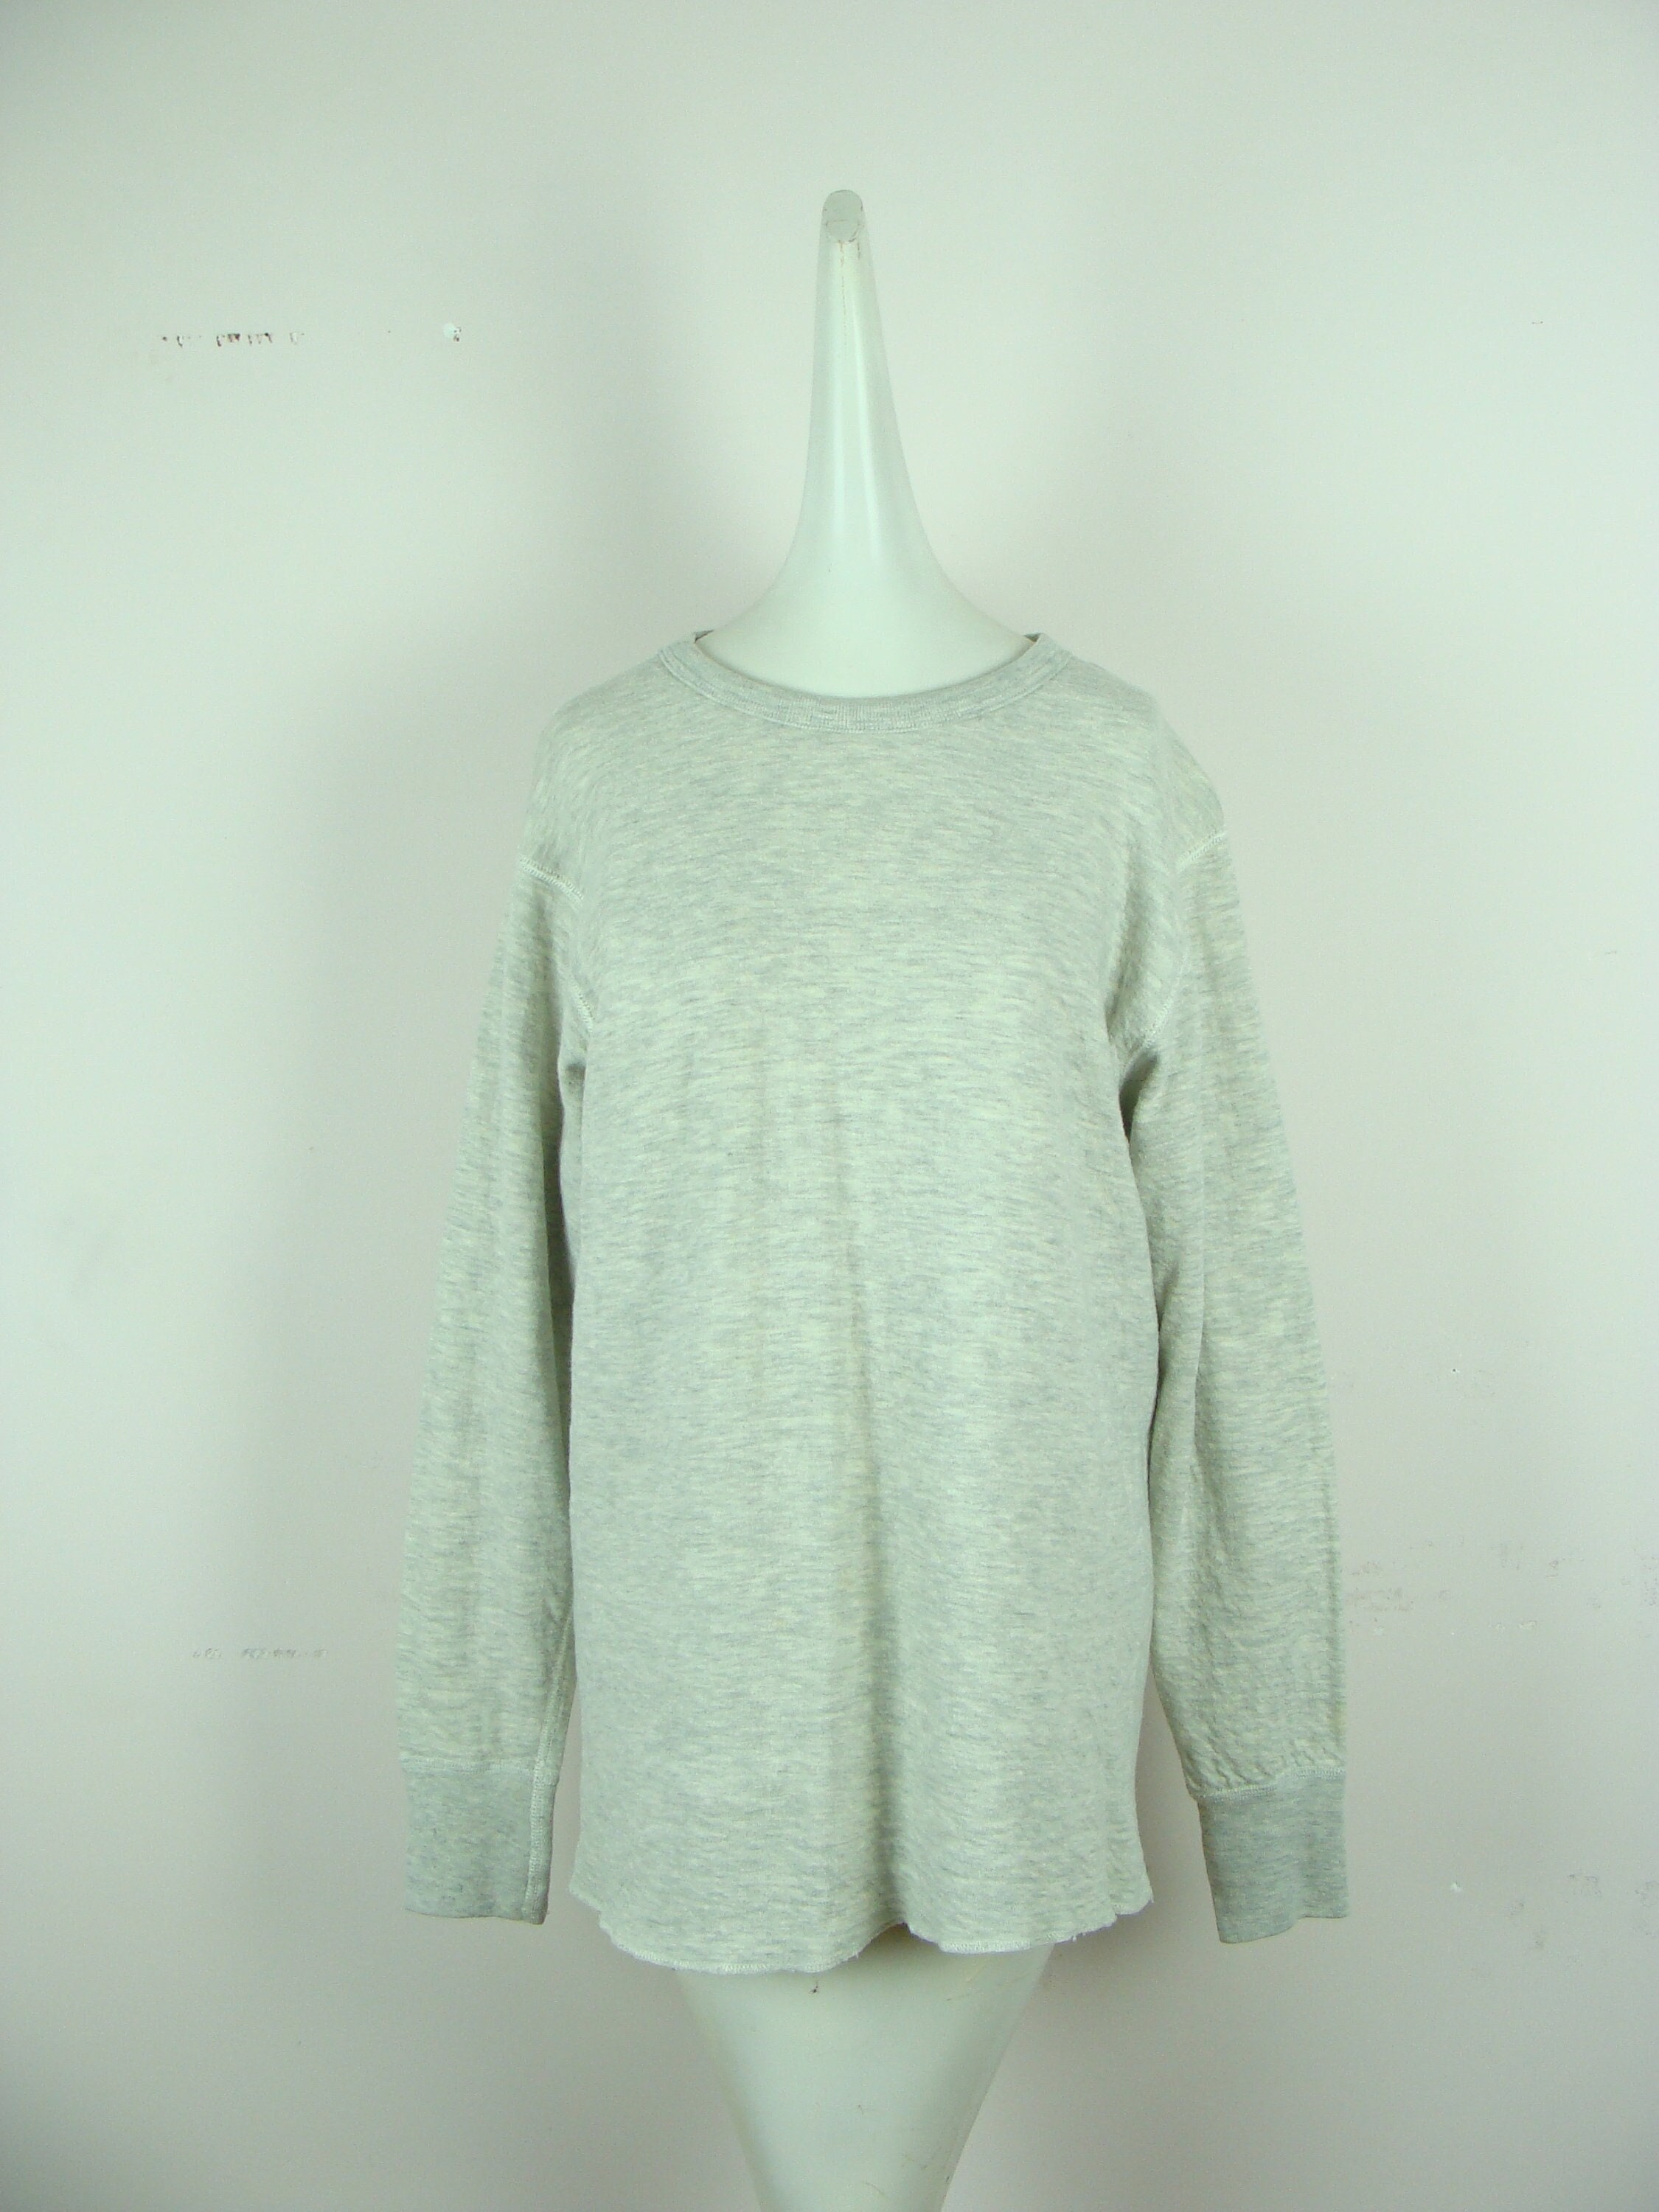 Vintage Duofold Shirt 80s Long Sleeve Thermal Undershirt | Etsy